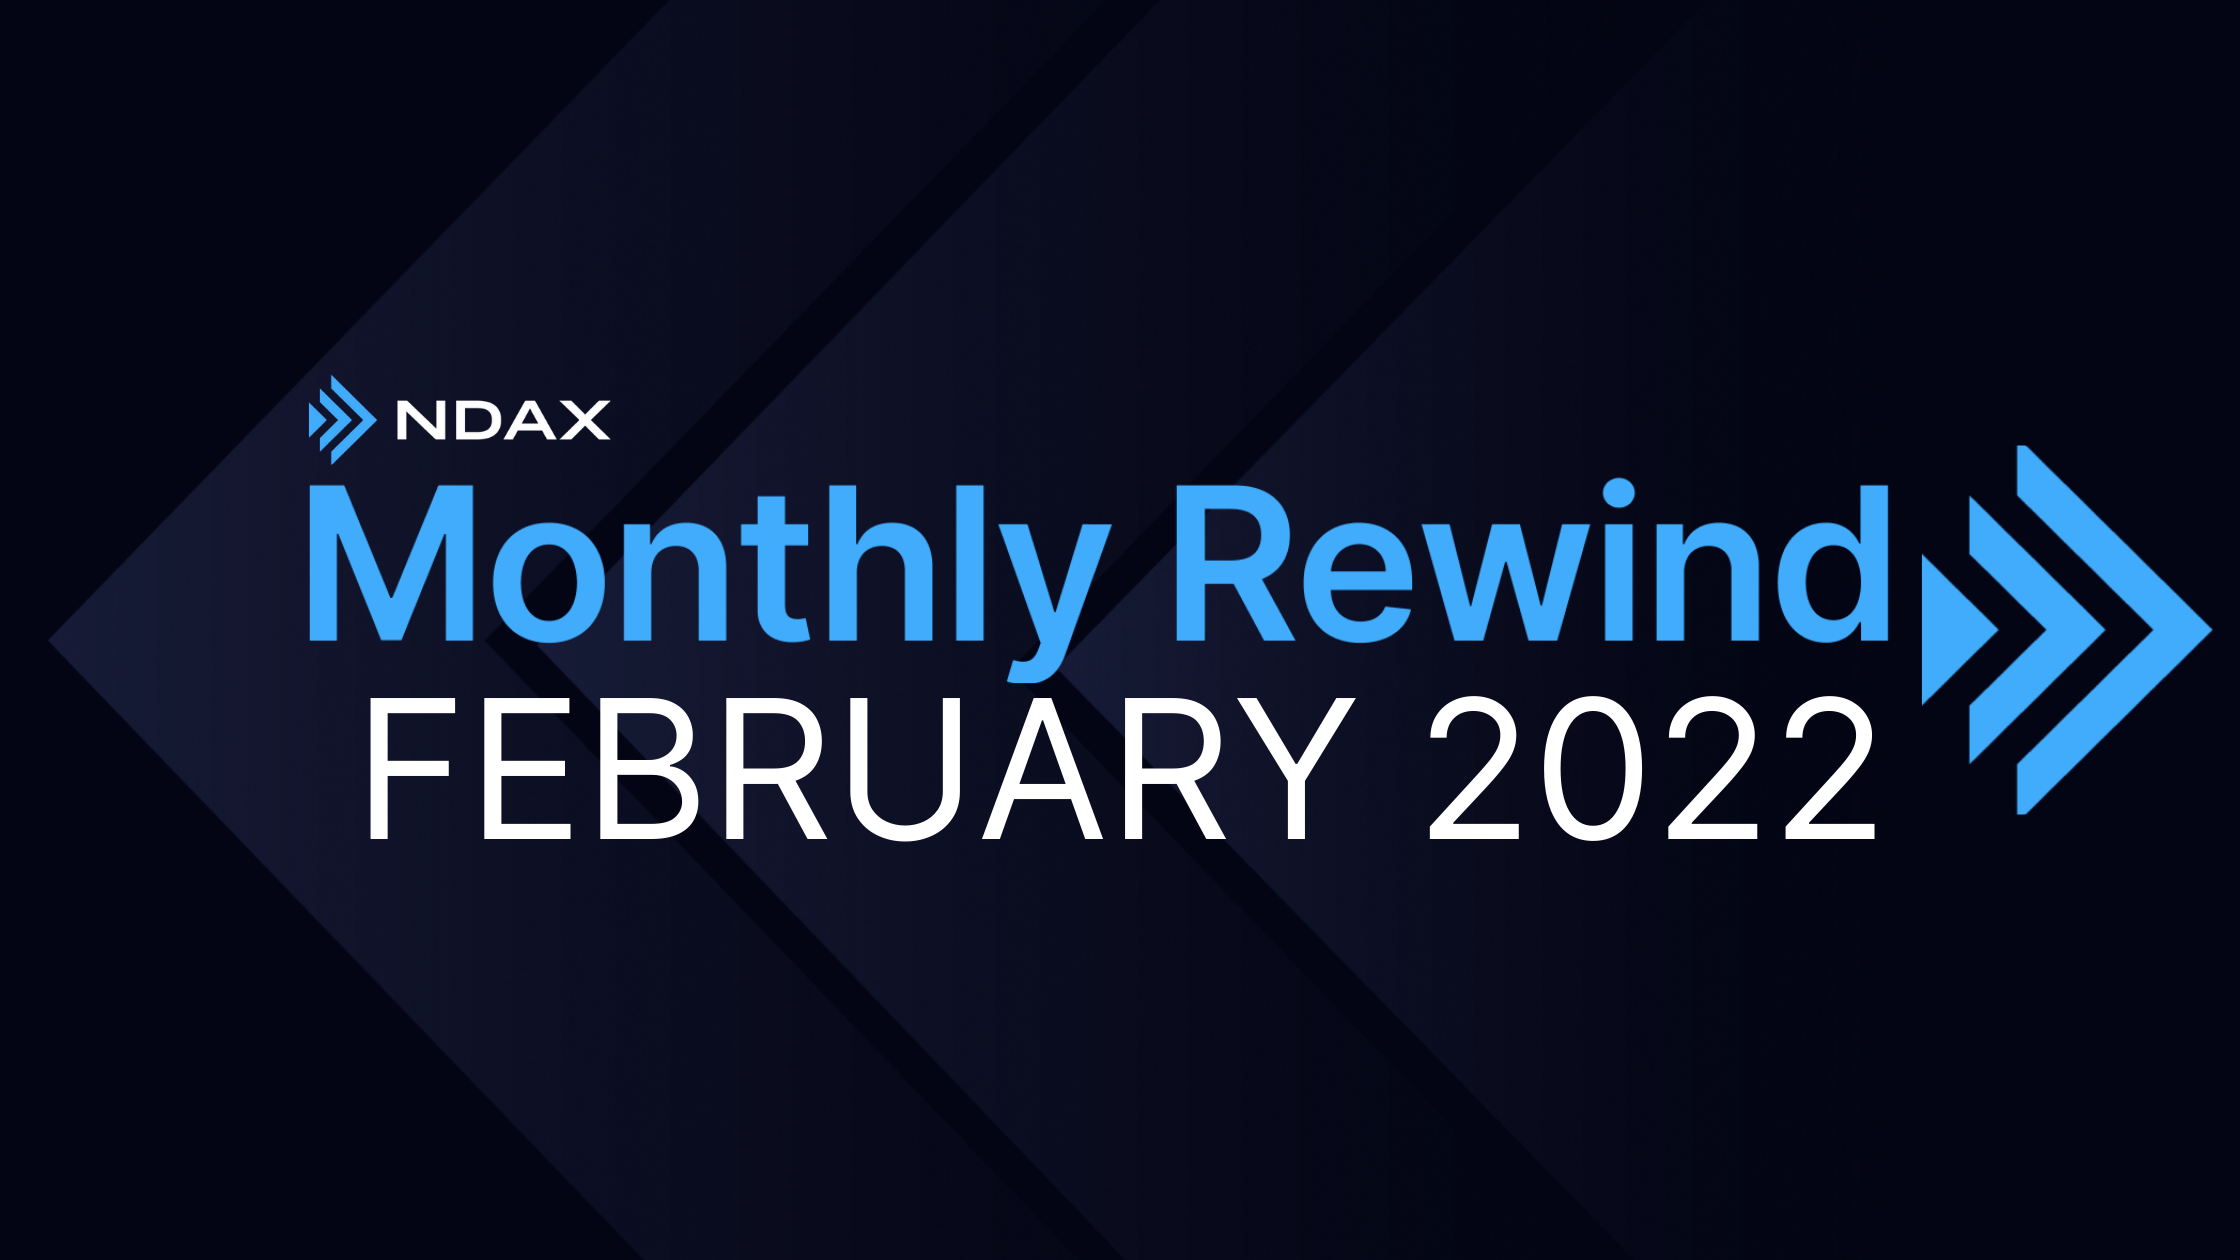 NDAX Monthly Rewind - February 2022